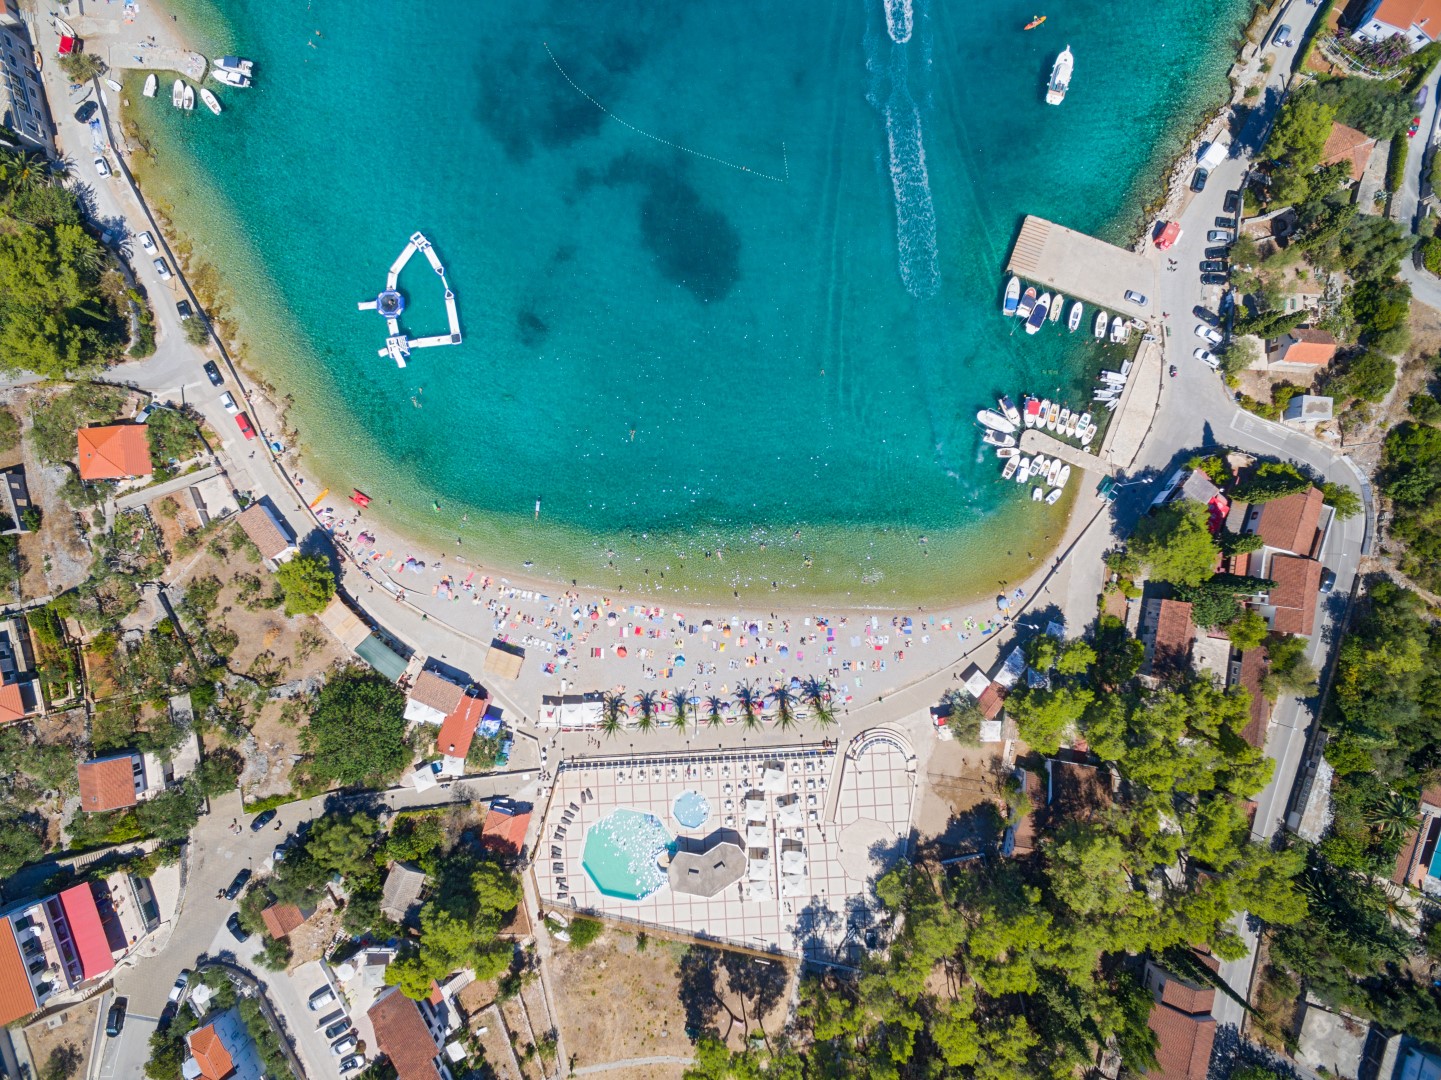 Necujam Bay, Solta, Croatia